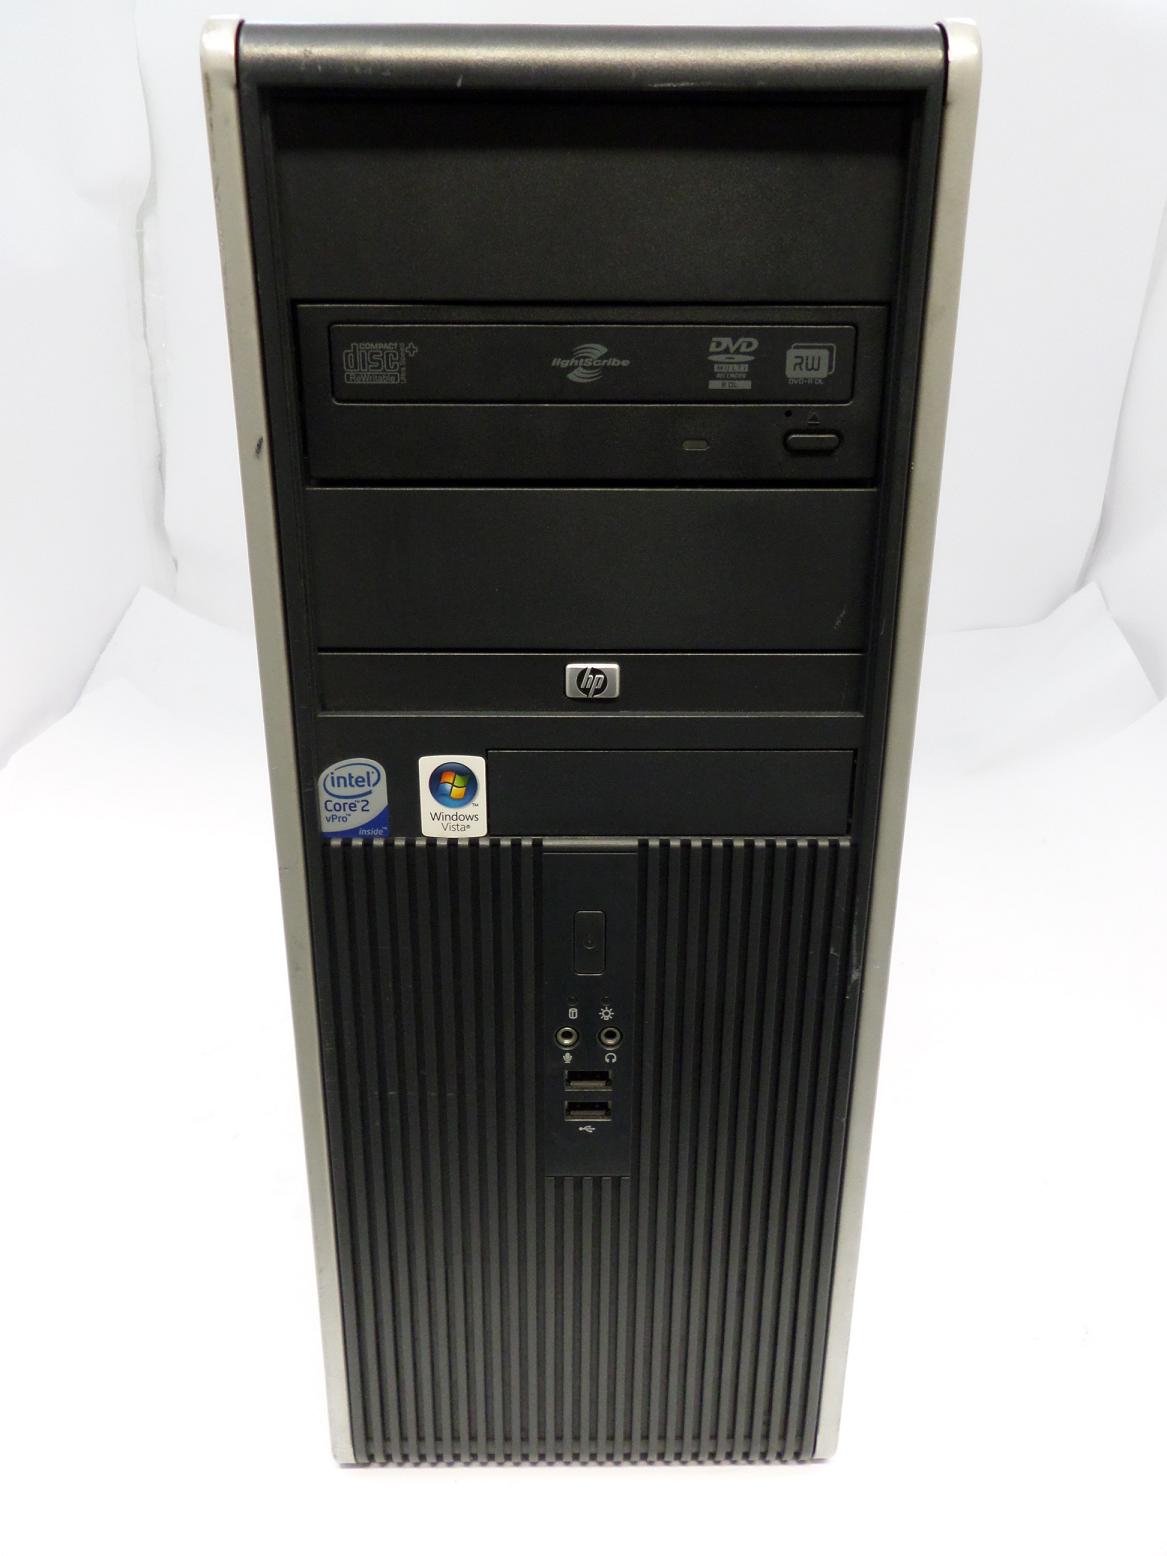 dc7800p - HP Compaq dc7800 Intel Core Duo 3GHz 2Gb RAM CD/DVD-ROM Minitower PC - No HDD - USED